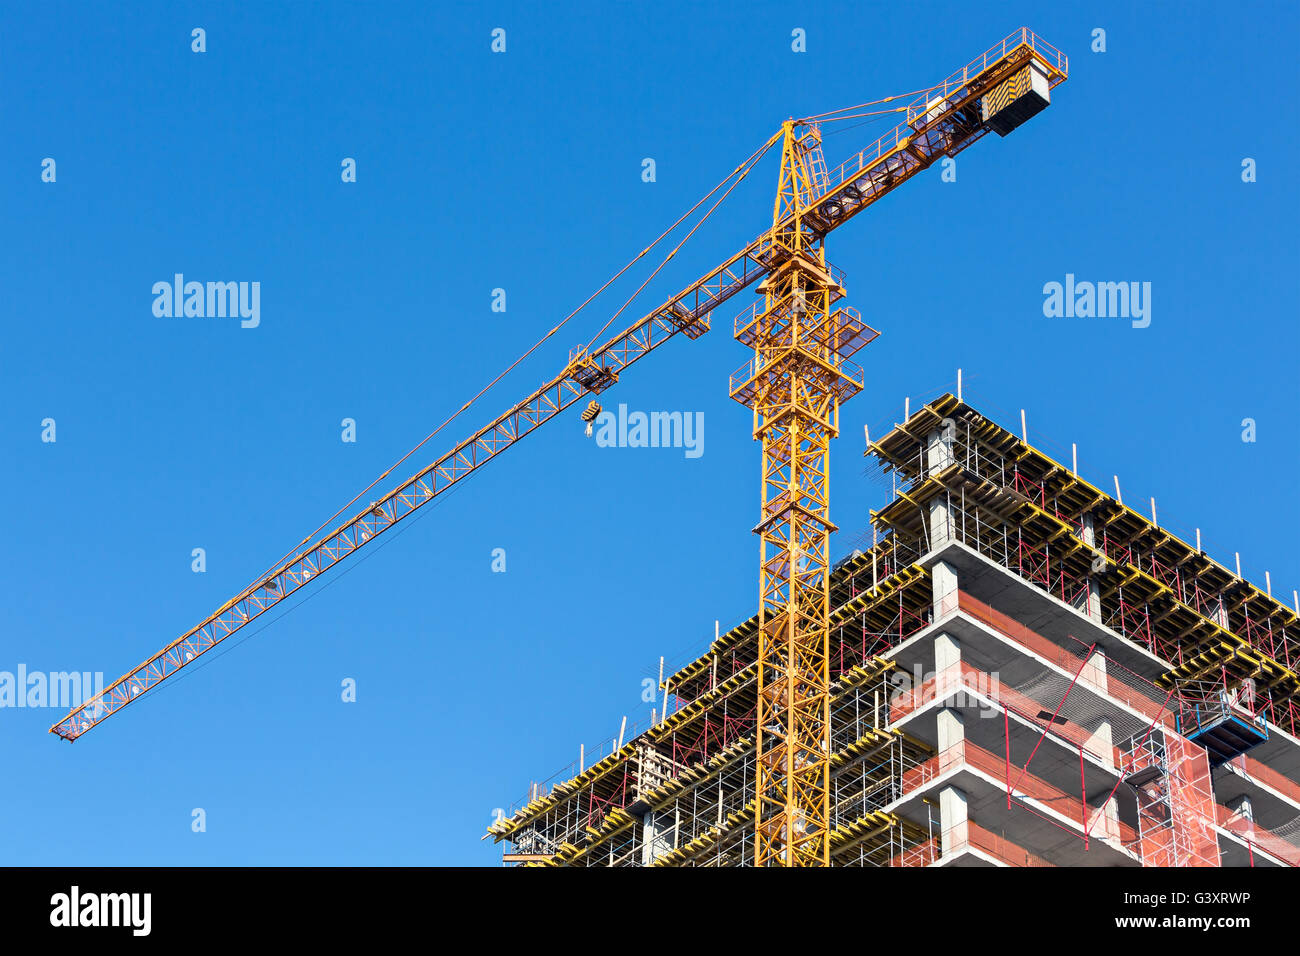 Bau Baustelle gegen blauen Himmel mit Turmdrehkran Stockfoto